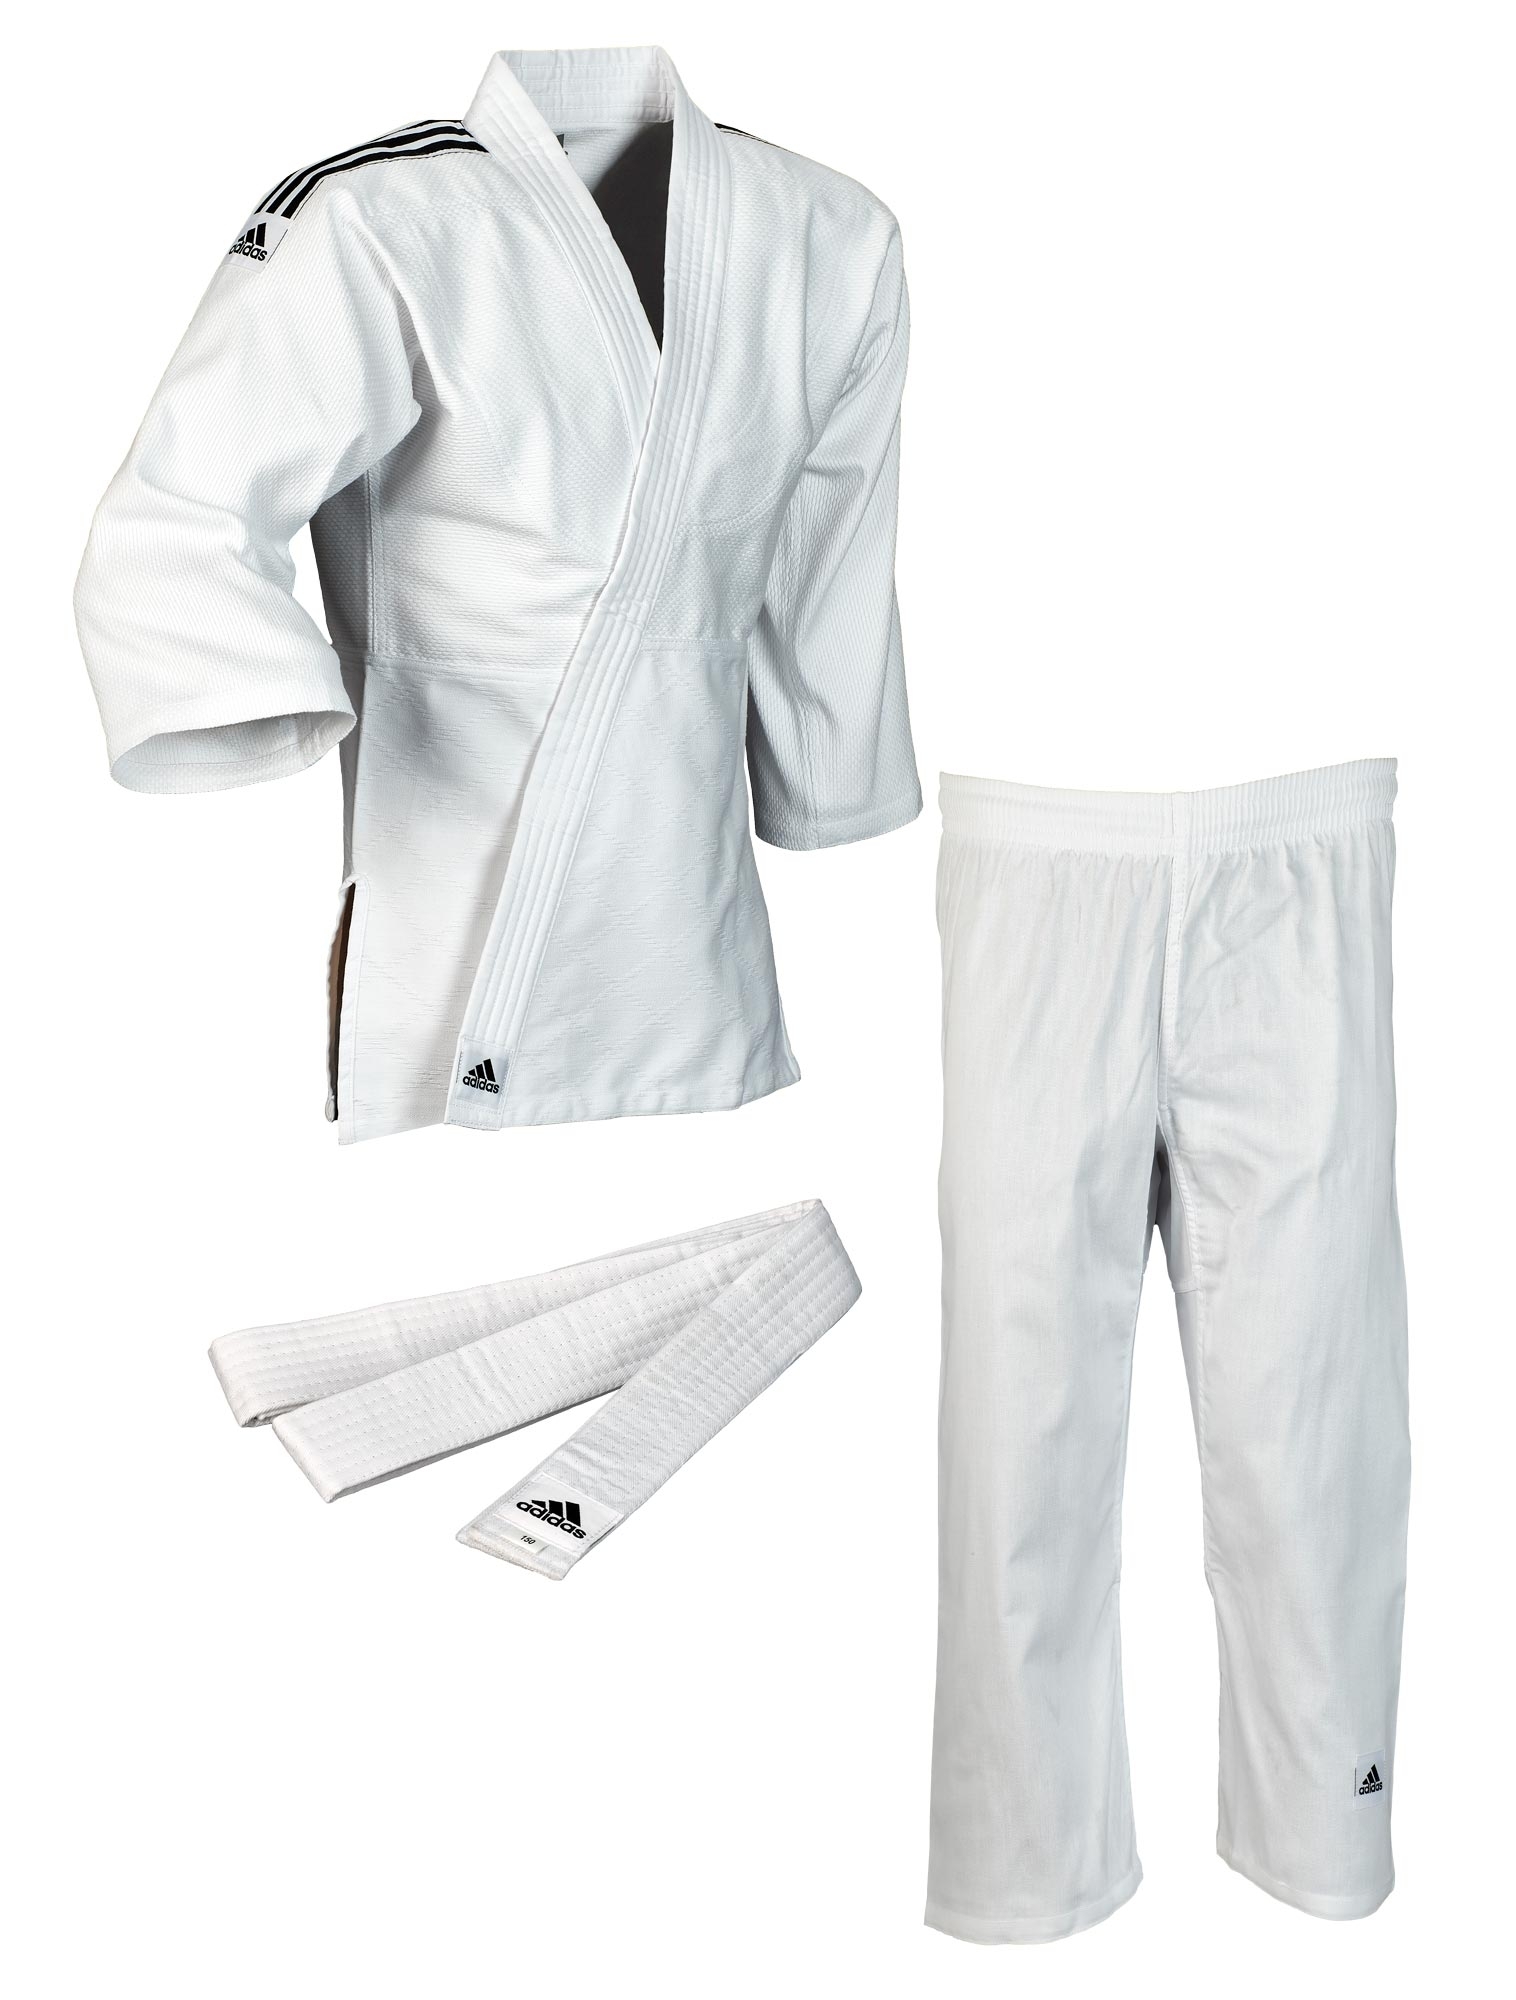 Yudesun Kampfsport Bekleidung Unisex Kinder Erwachsene Dobok Taekwondo Gi Sets Judo Anzug Retro Training Wettkampf Uniform Outfit Karate Baumwolle